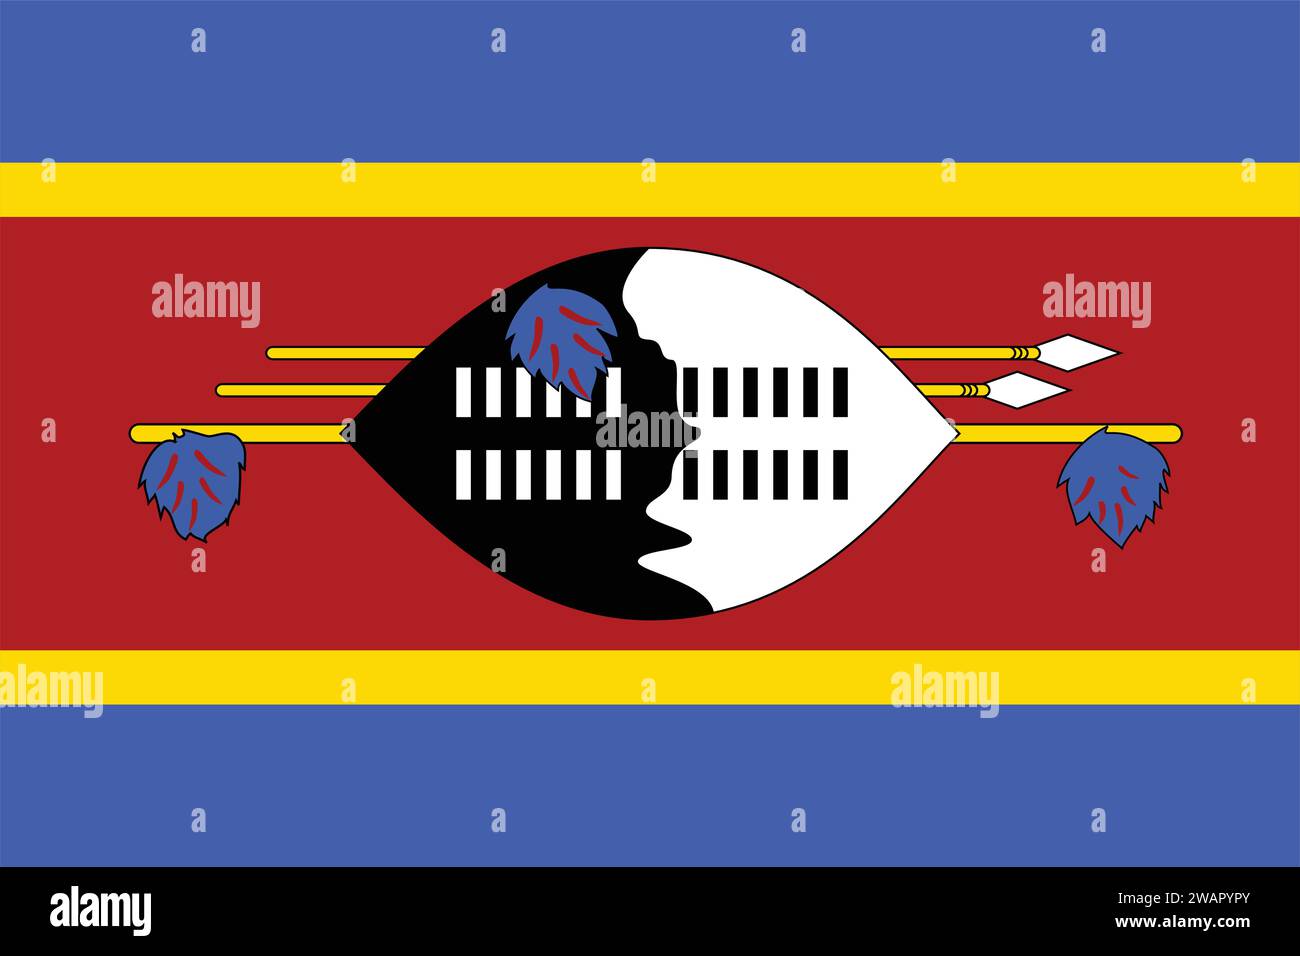 Hohe detaillierte Flagge von Swasiland. Nationale Flagge Swasilands. Afrika. 3D-Abbildung. Stock Vektor